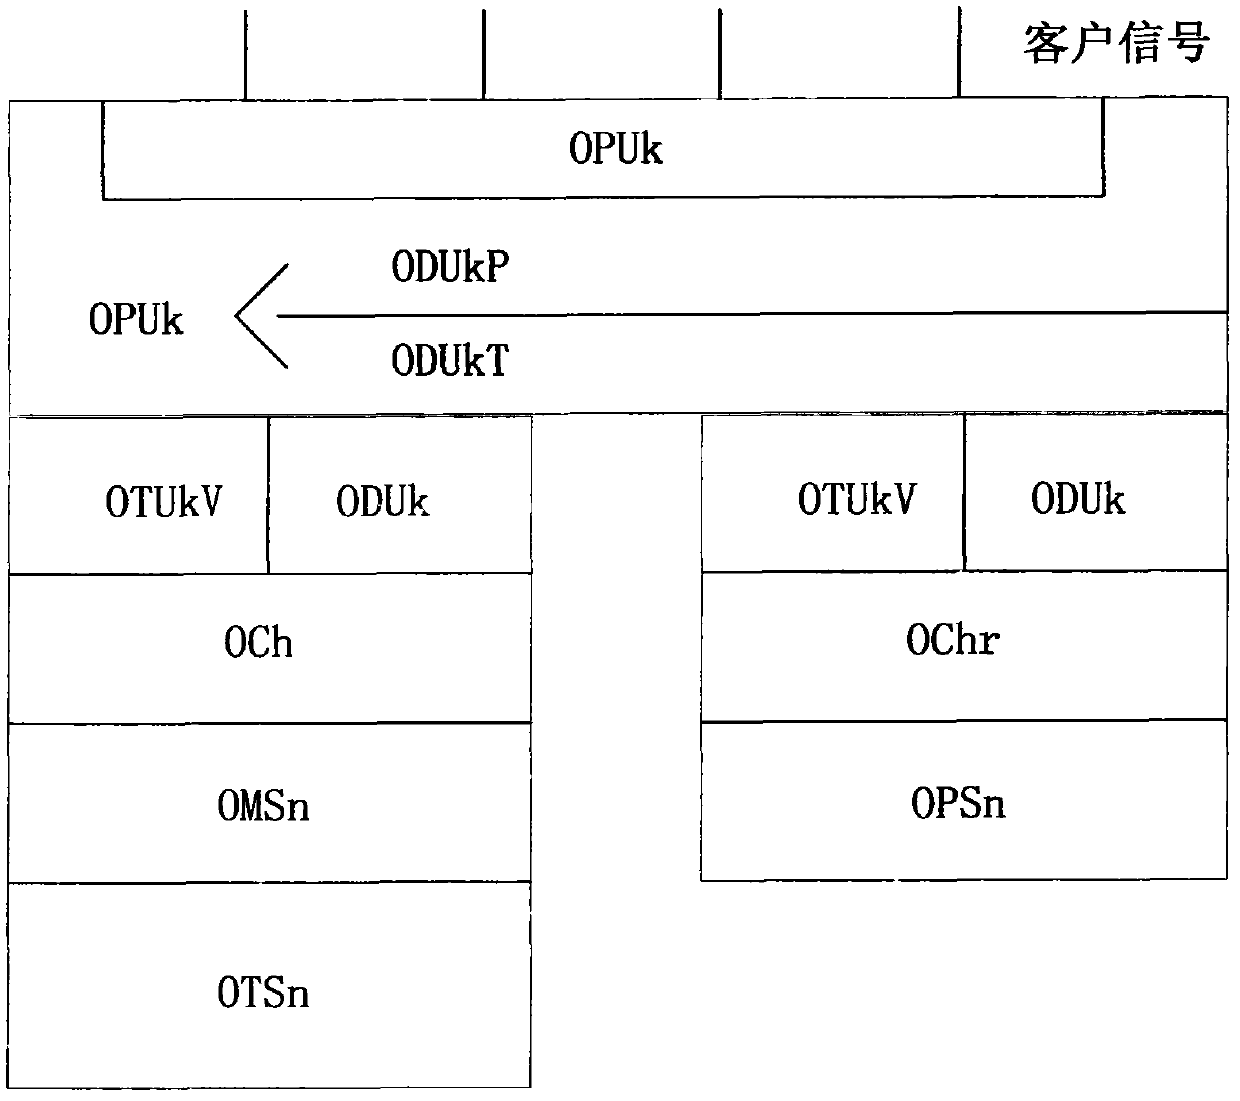 Client side clock transmission method based on optical carrier remodulation in optical transmission network